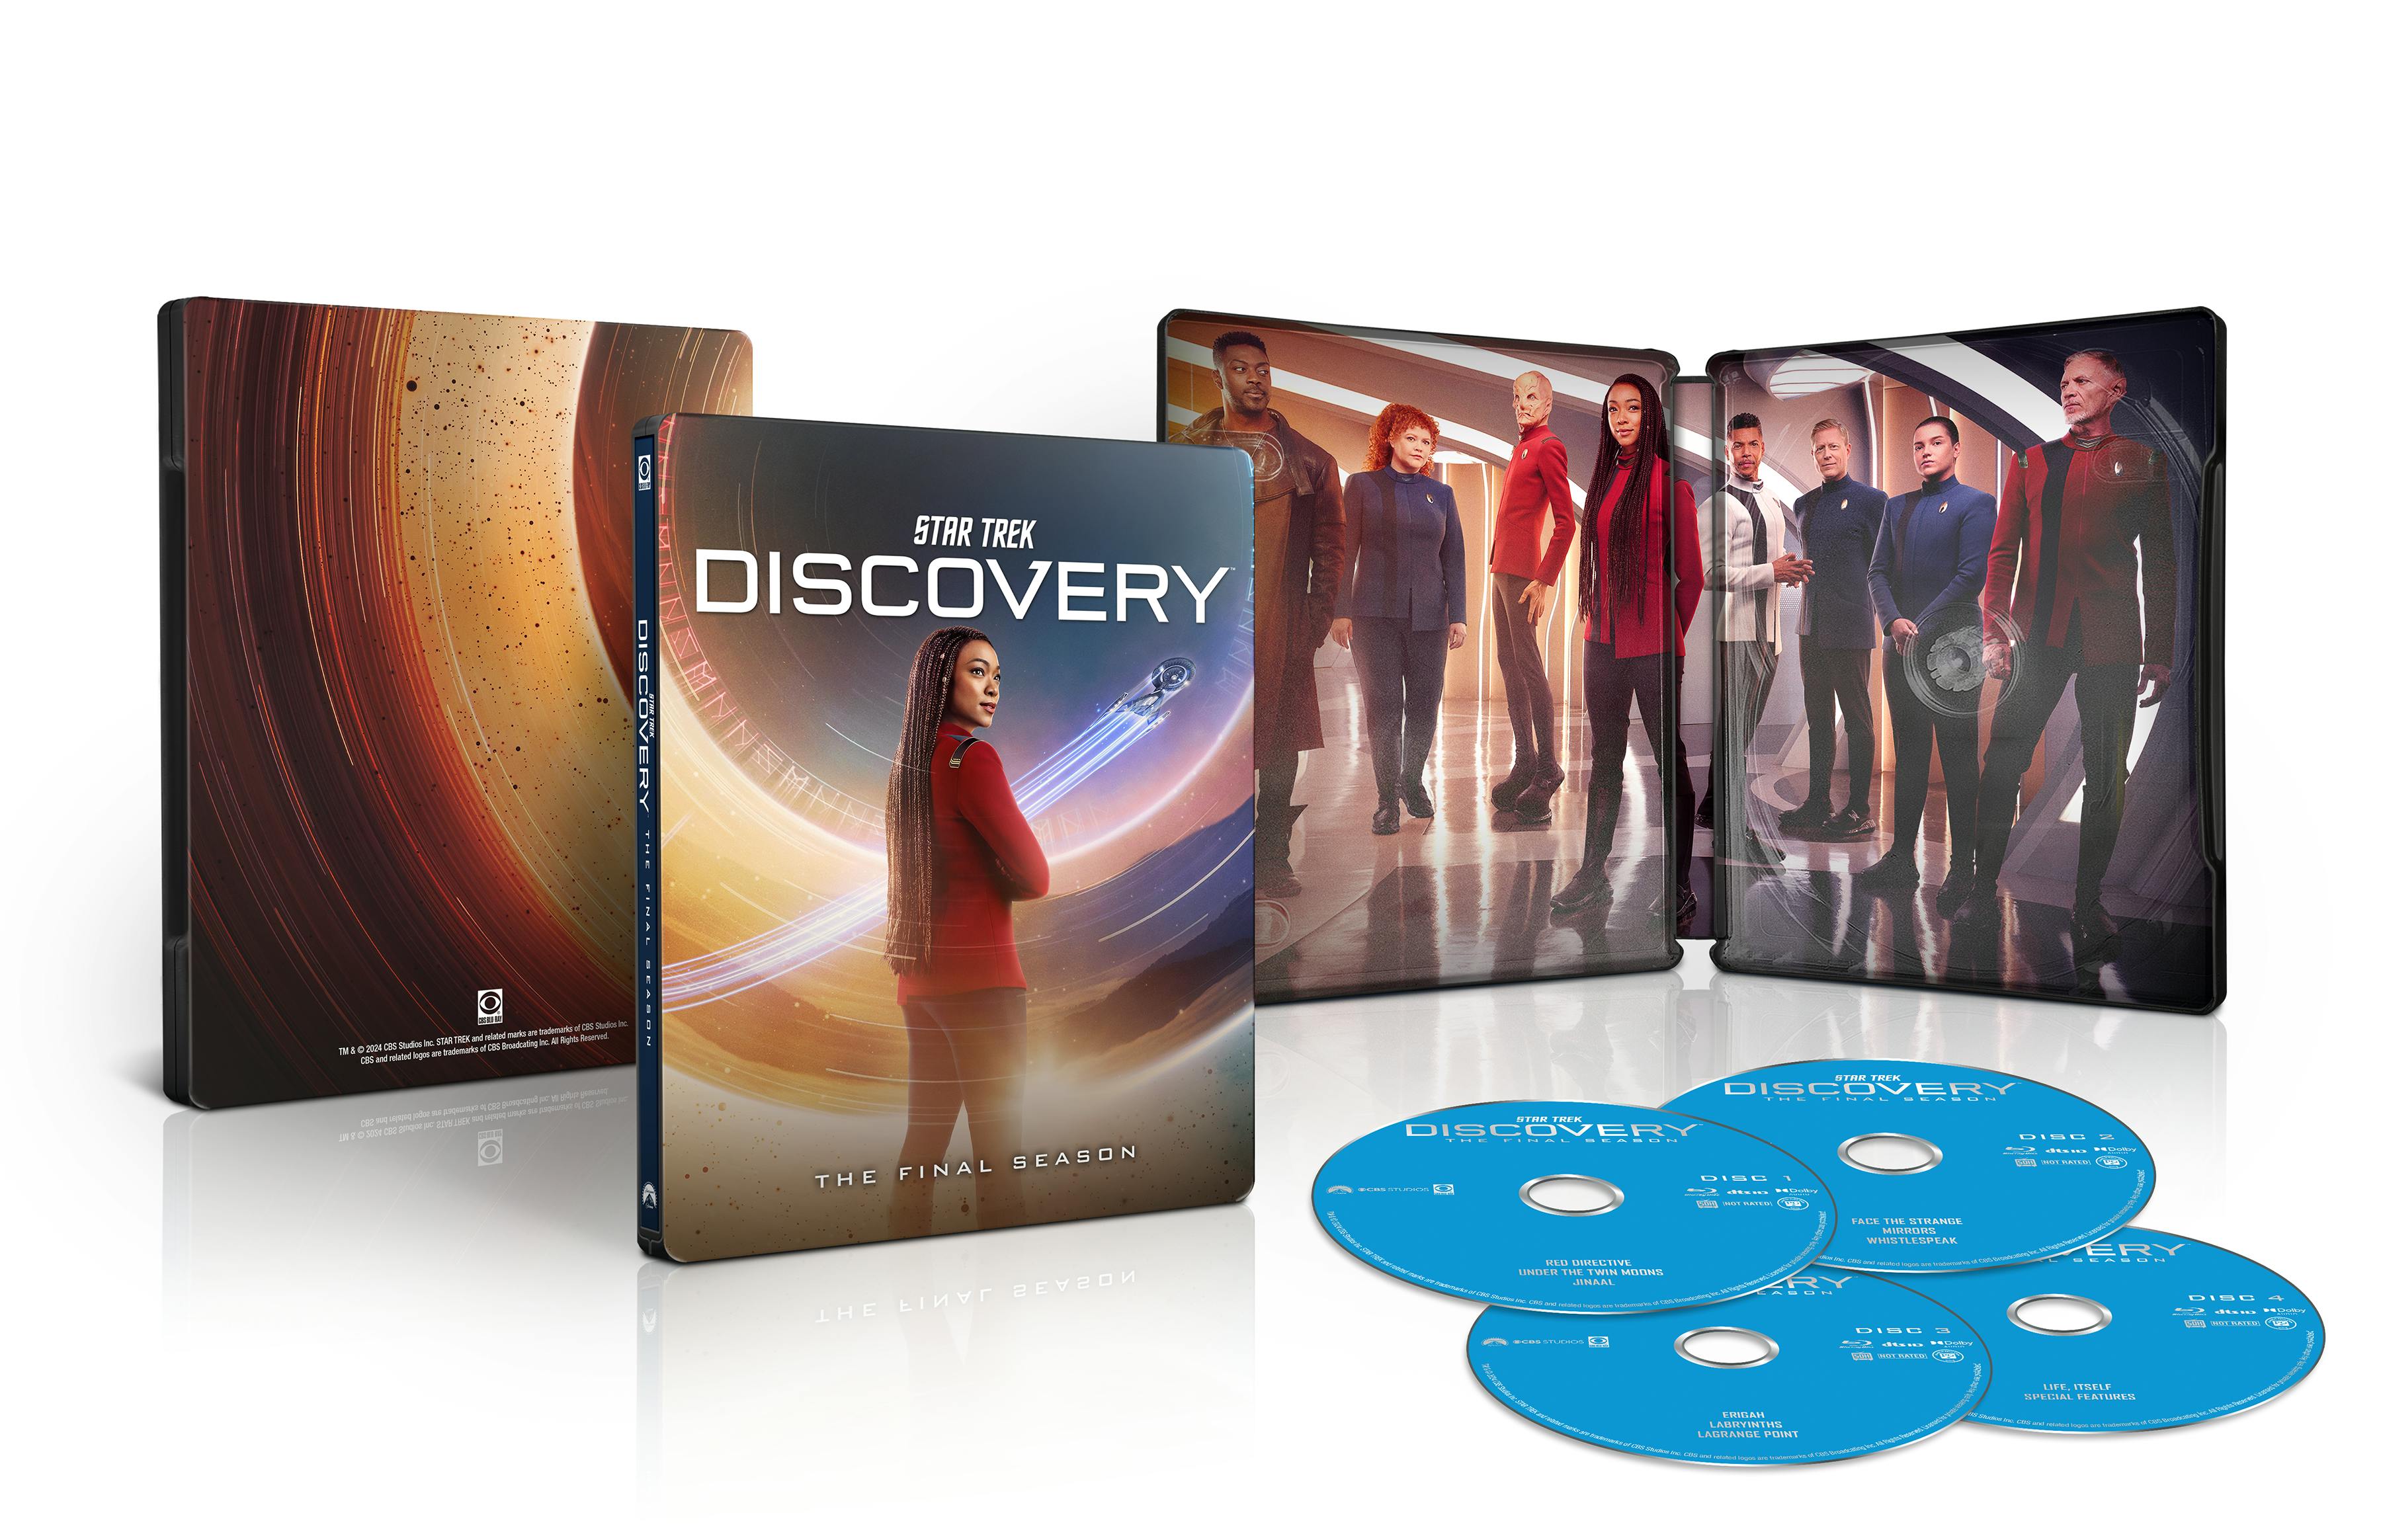 Star Trek: Discovery The Final Season Limited Edition Blu-ray Steelbook